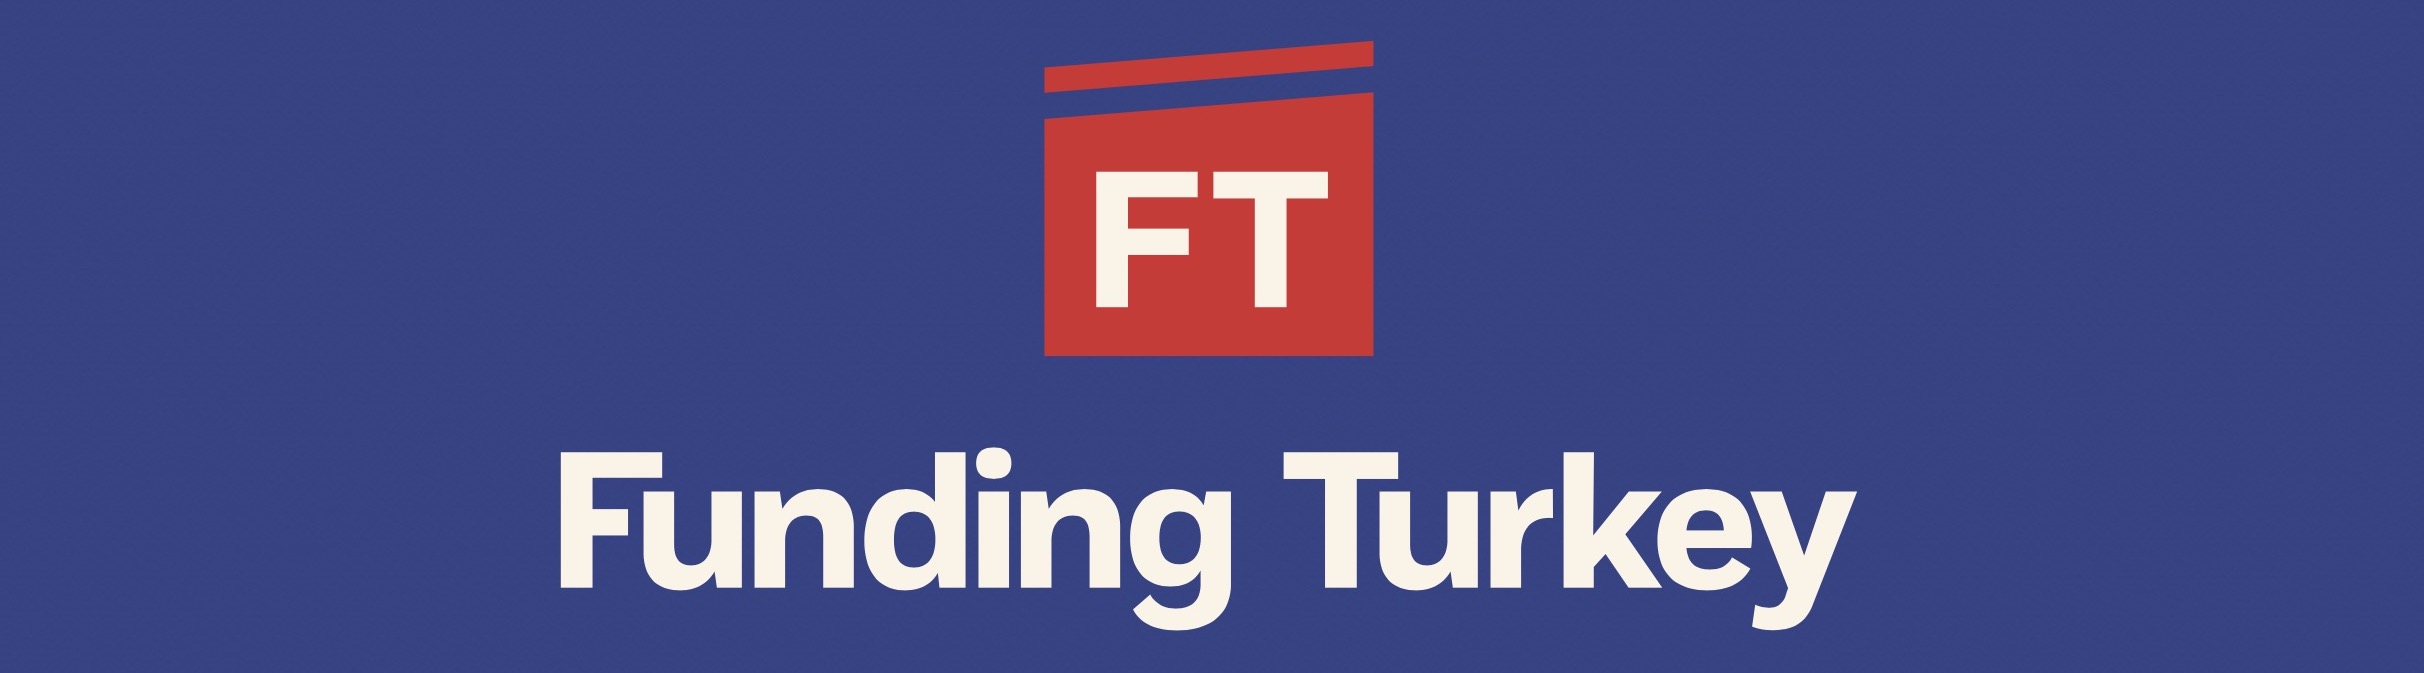 Funding Turkey